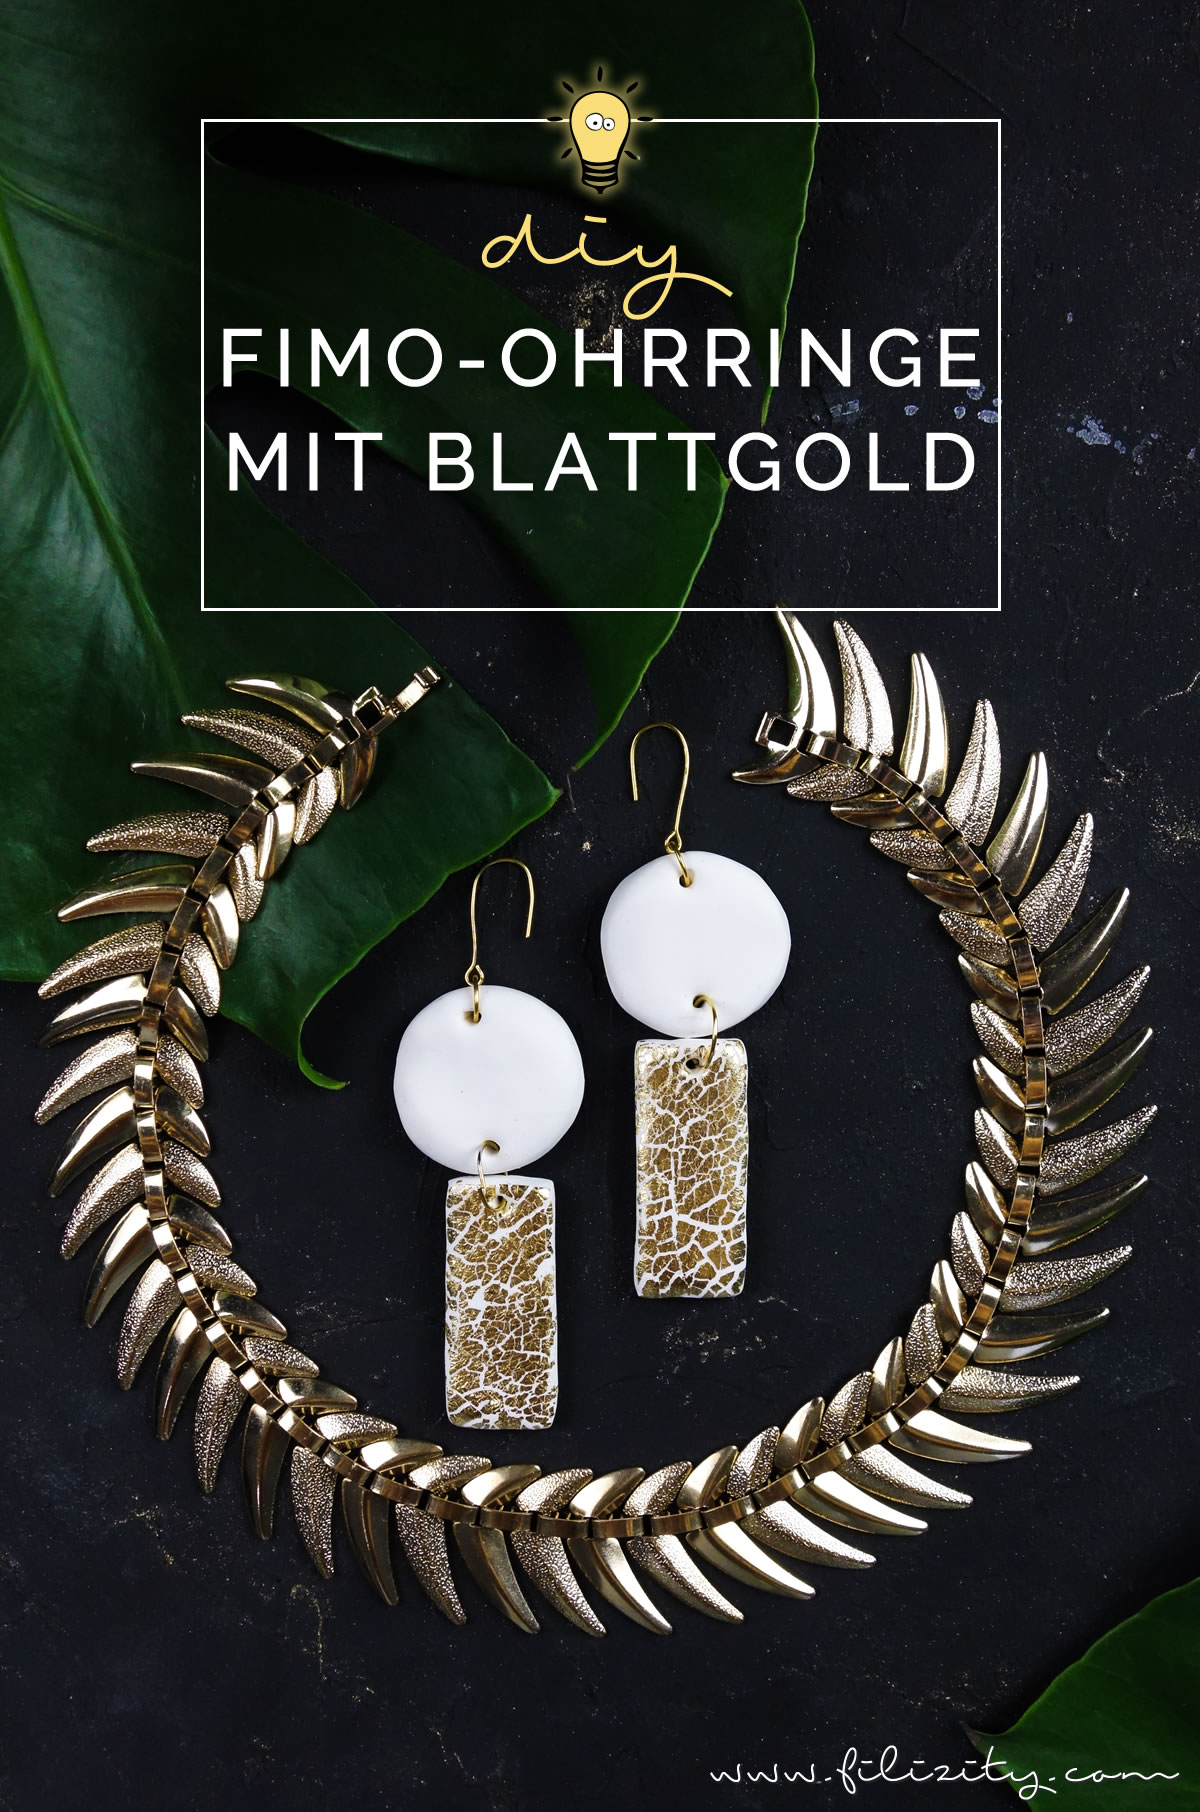 DIY Fimo Ohrringe mit Crackle-Gold | Fimo Schmuck selber machen - 5 Blogs 1000 Ideen | Filizity.com | DIY-Blog aus dem Rheinland #fimo #gold #crackle #krakelierlack